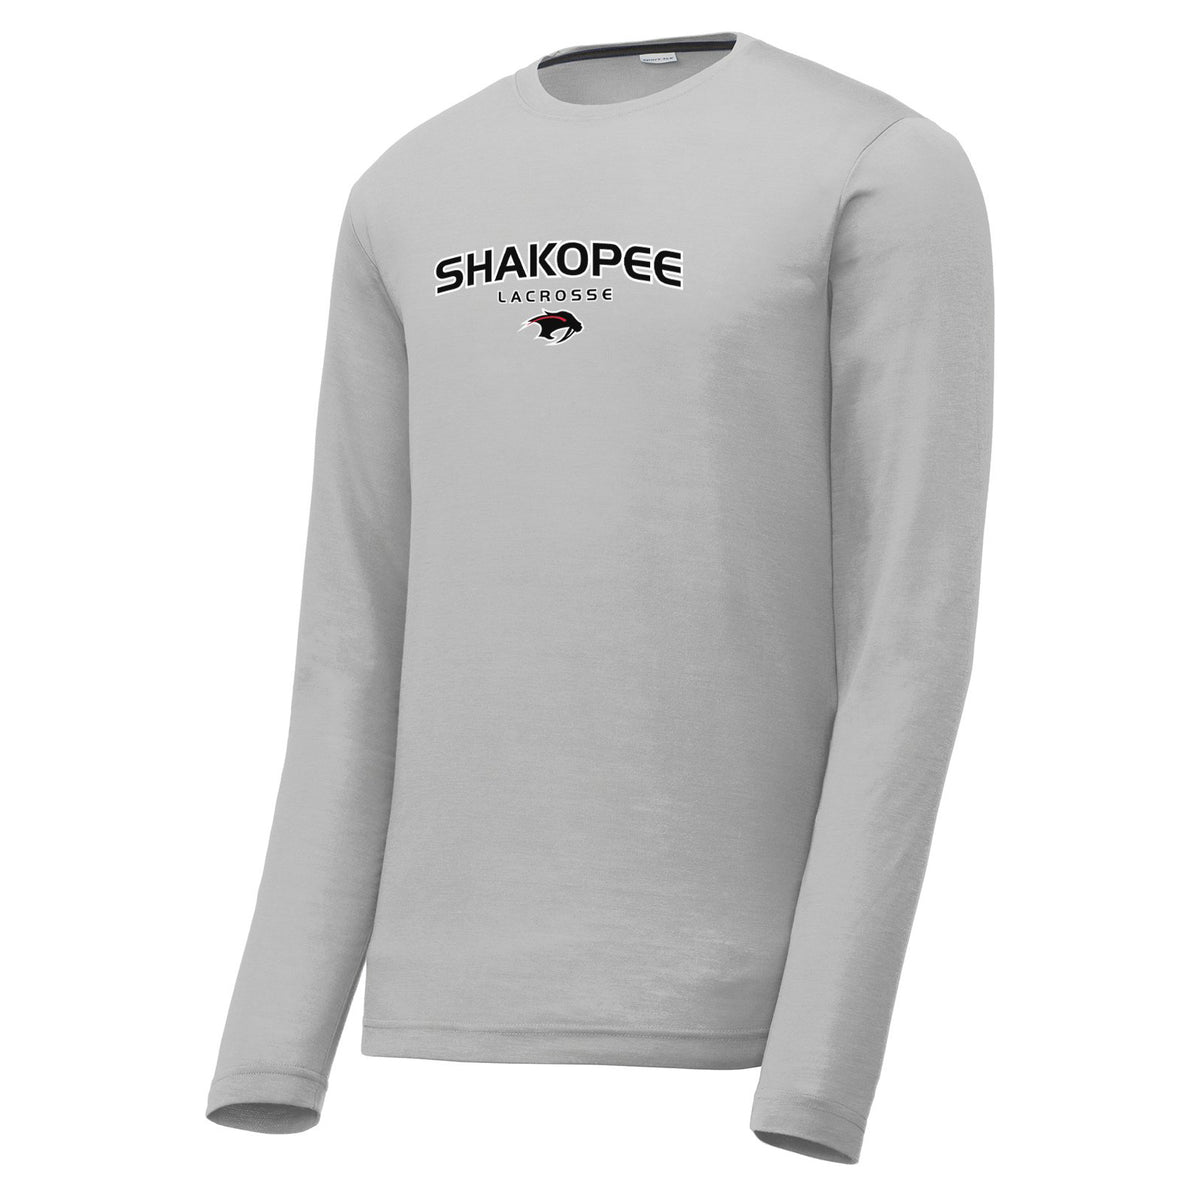 Shakopee Lacrosse Long Sleeve CottonTouch Performance Shirt